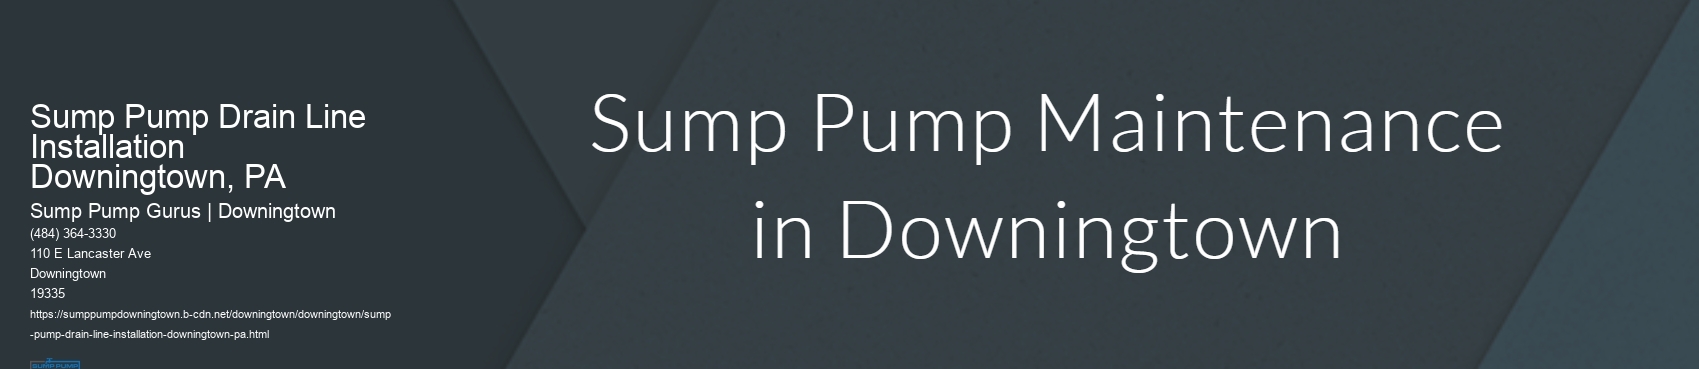 Sump Pump Drain Line Installation Downingtown, PA